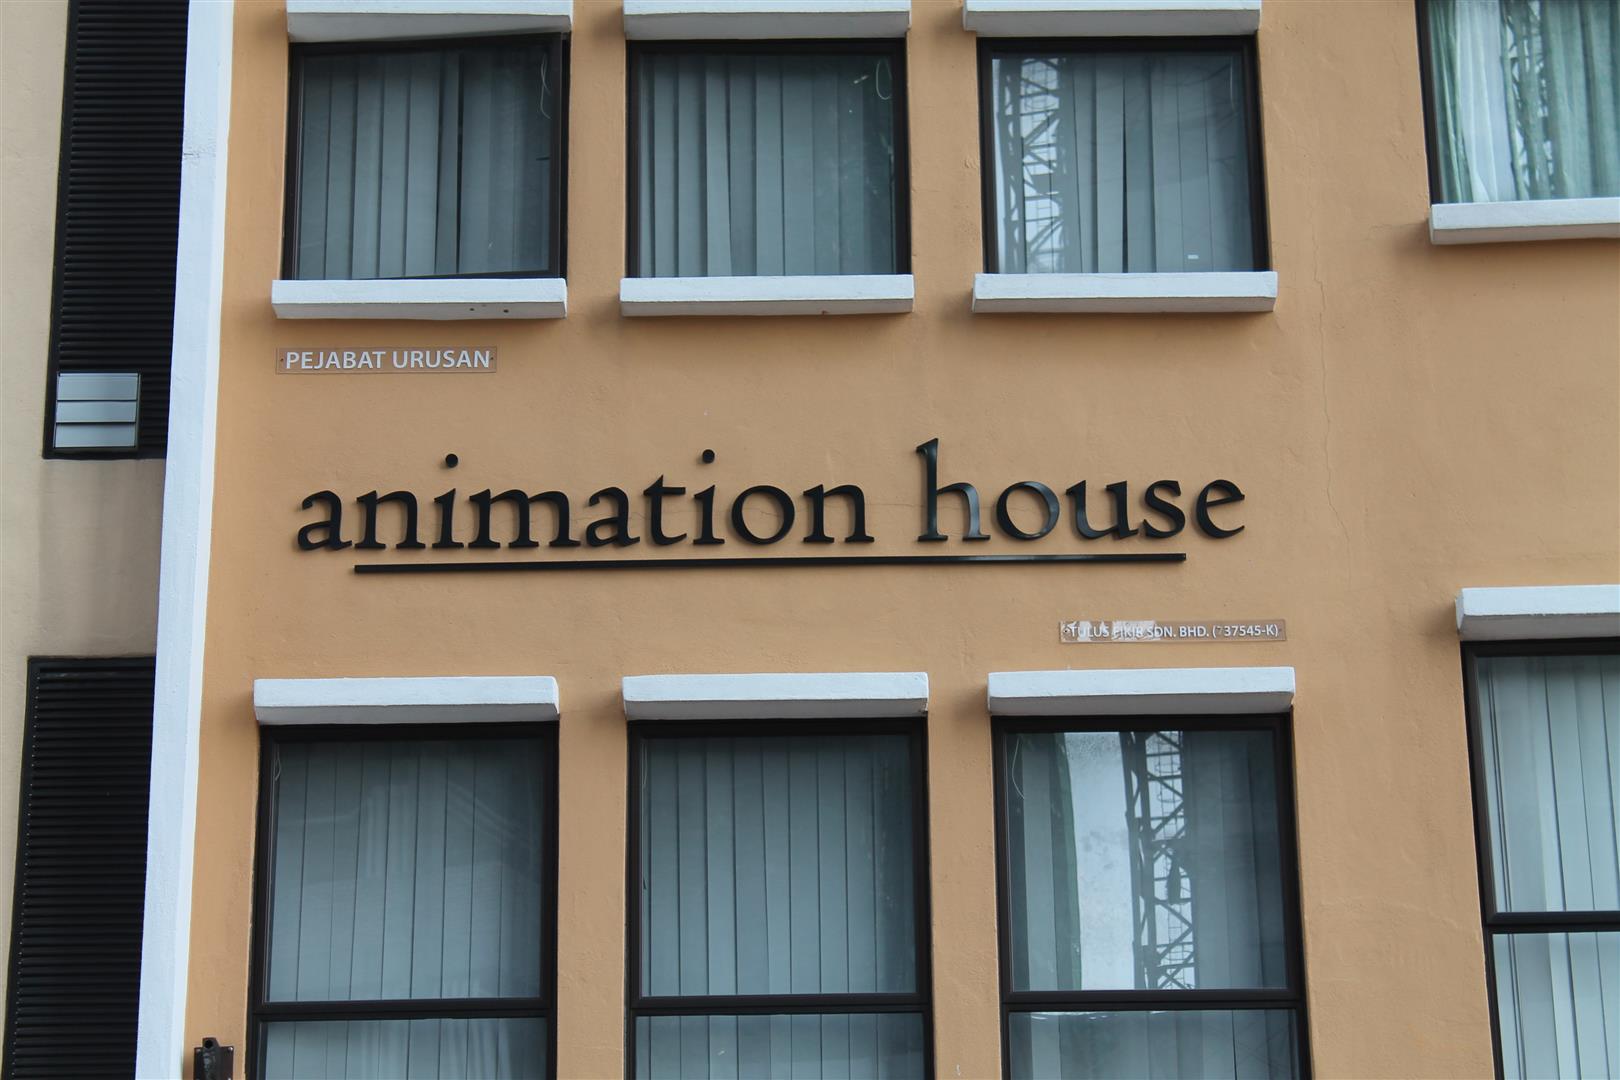 Tulus Fikir - Visit to Local Animation Company 35